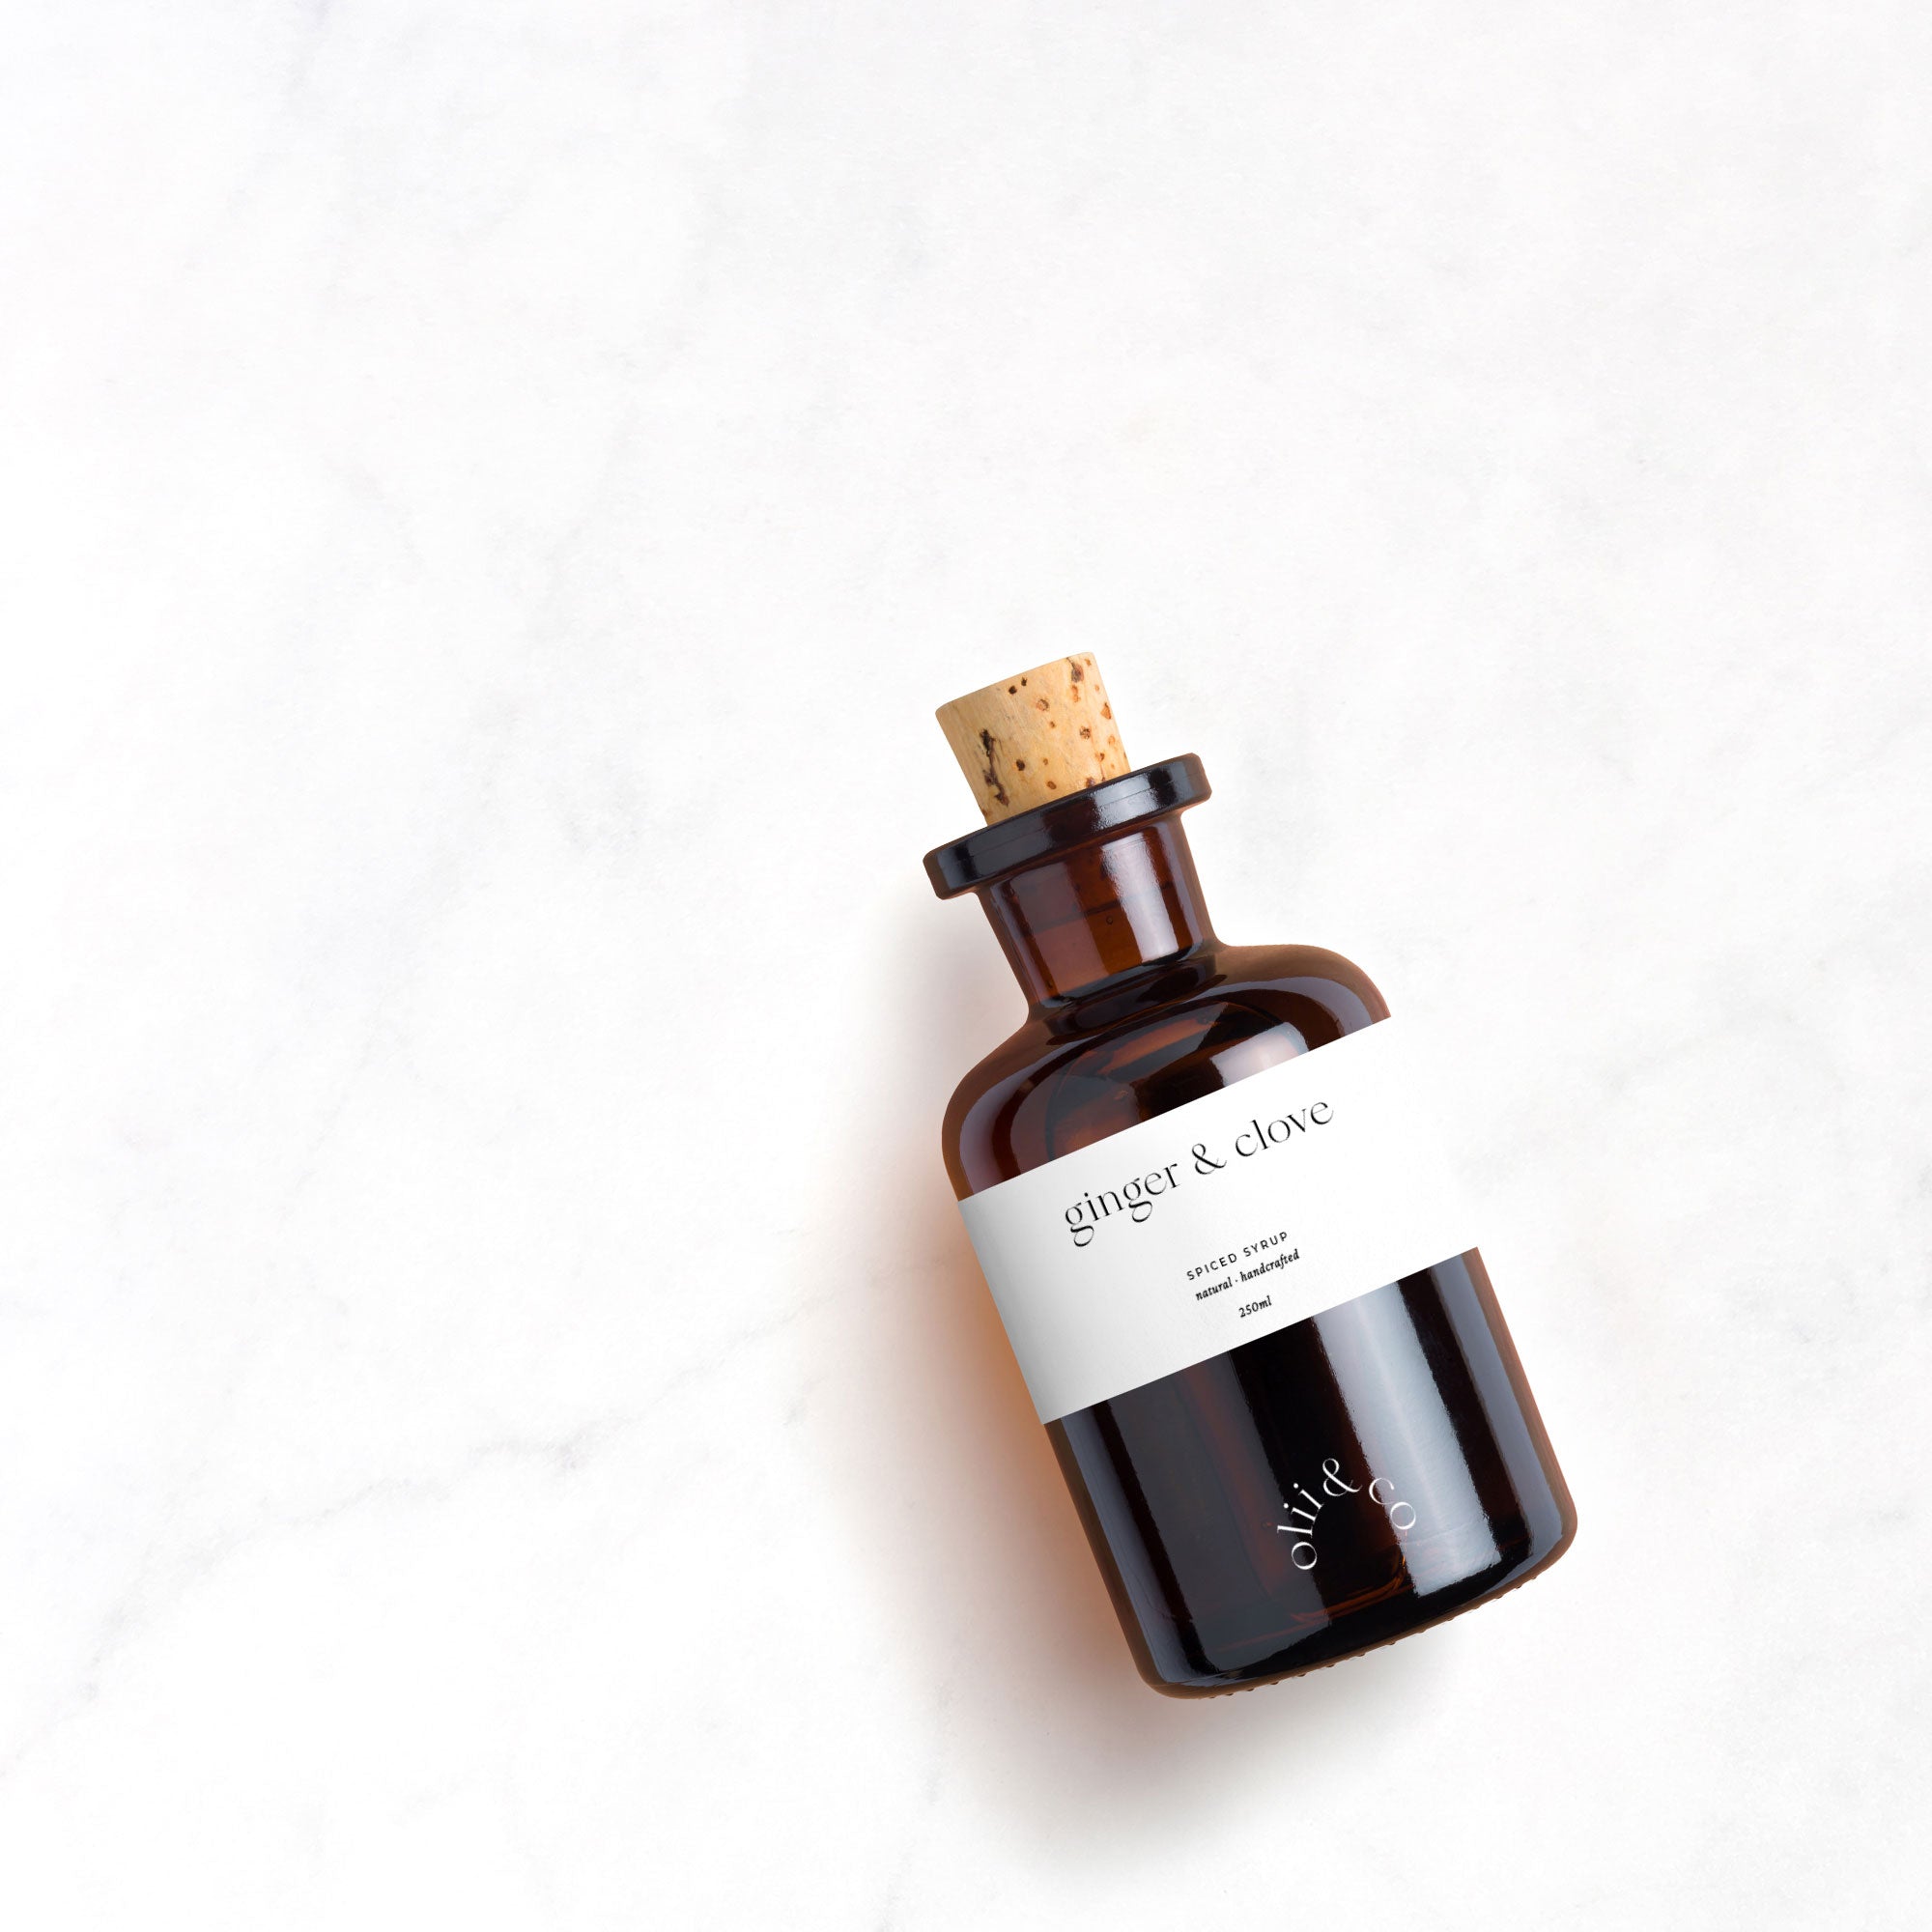 Karolina Król Studio minimalist branding and sustainable packaging design for ginger syrup bottle